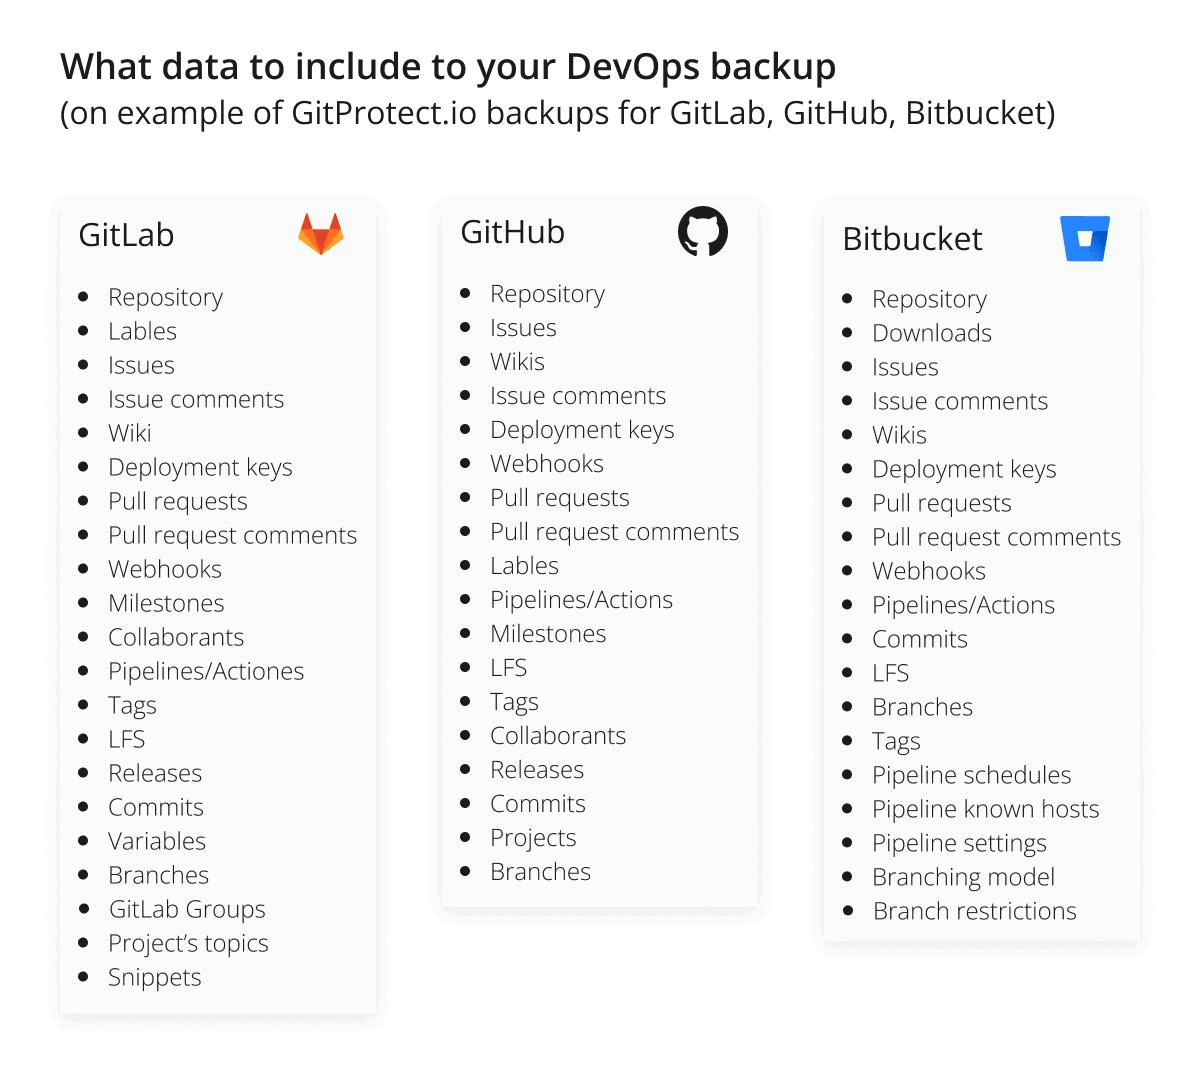 Datas to include to DevOps backup (on example of GitProtect.io backups for GitLab, GitHub, Bitbucket)